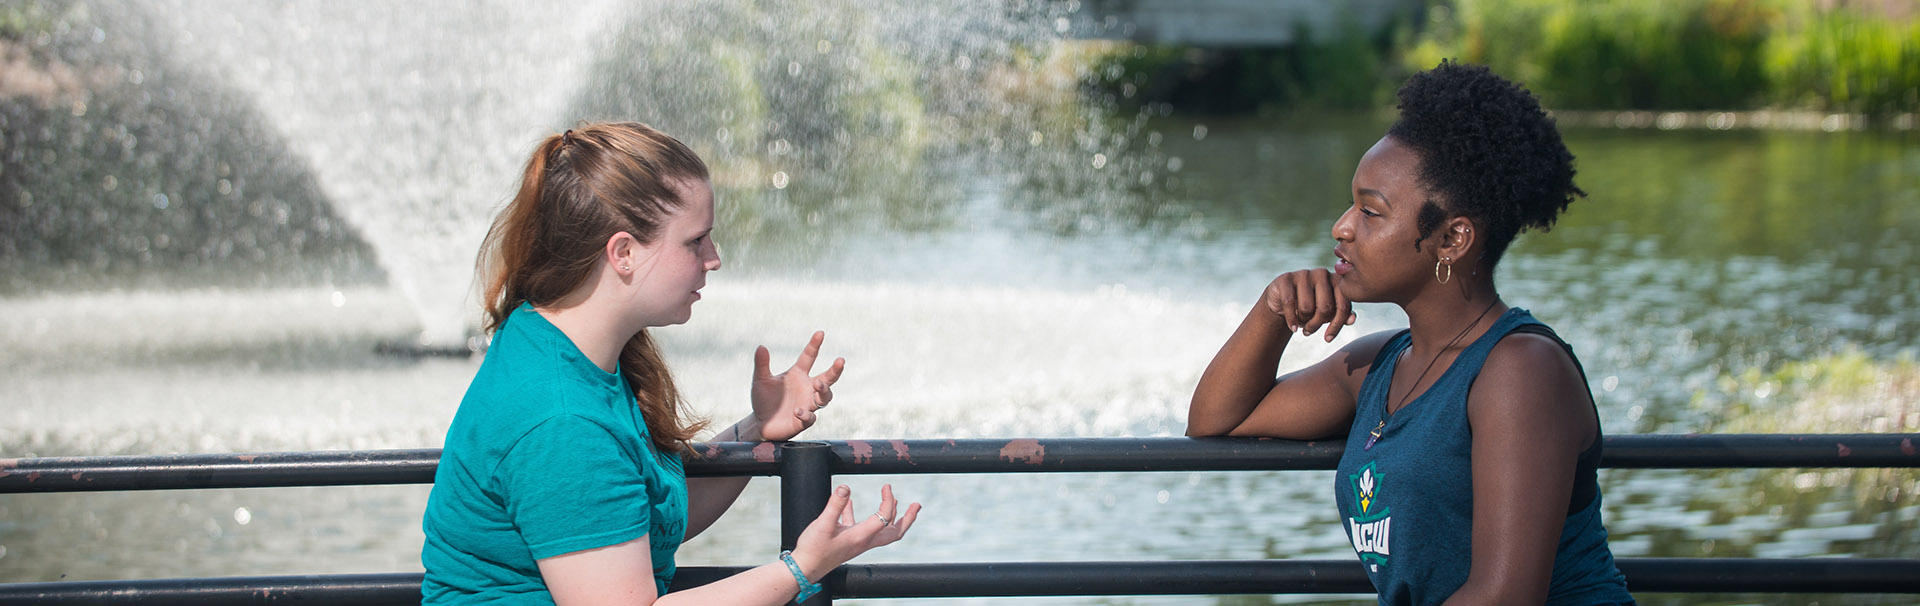 Two women talking in front of water fountain.